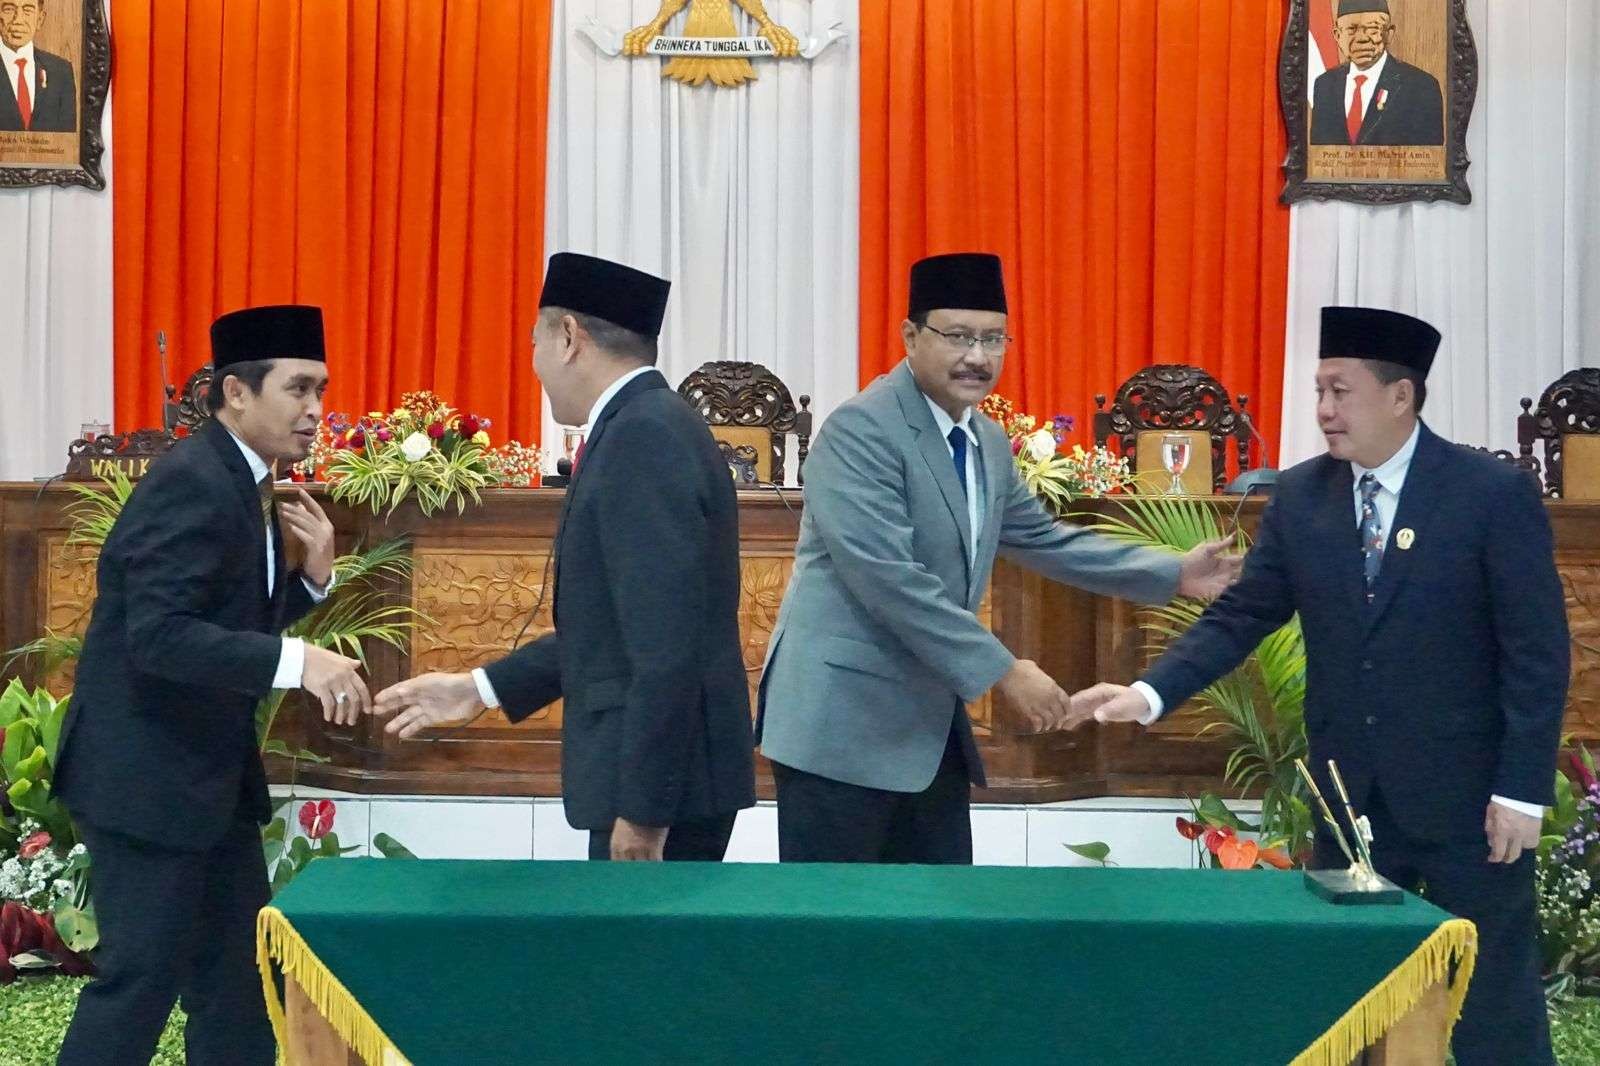 DPRD Kota Pasuruan, melaksanakan Rapat Paripurna dengan agenda Penyampaian Rekomendasi DPRD Kota Pasuruan Terhadap Laporan Keterangan Pertanggung Jawaban  (LKPJ) Walikota Pasuruan.